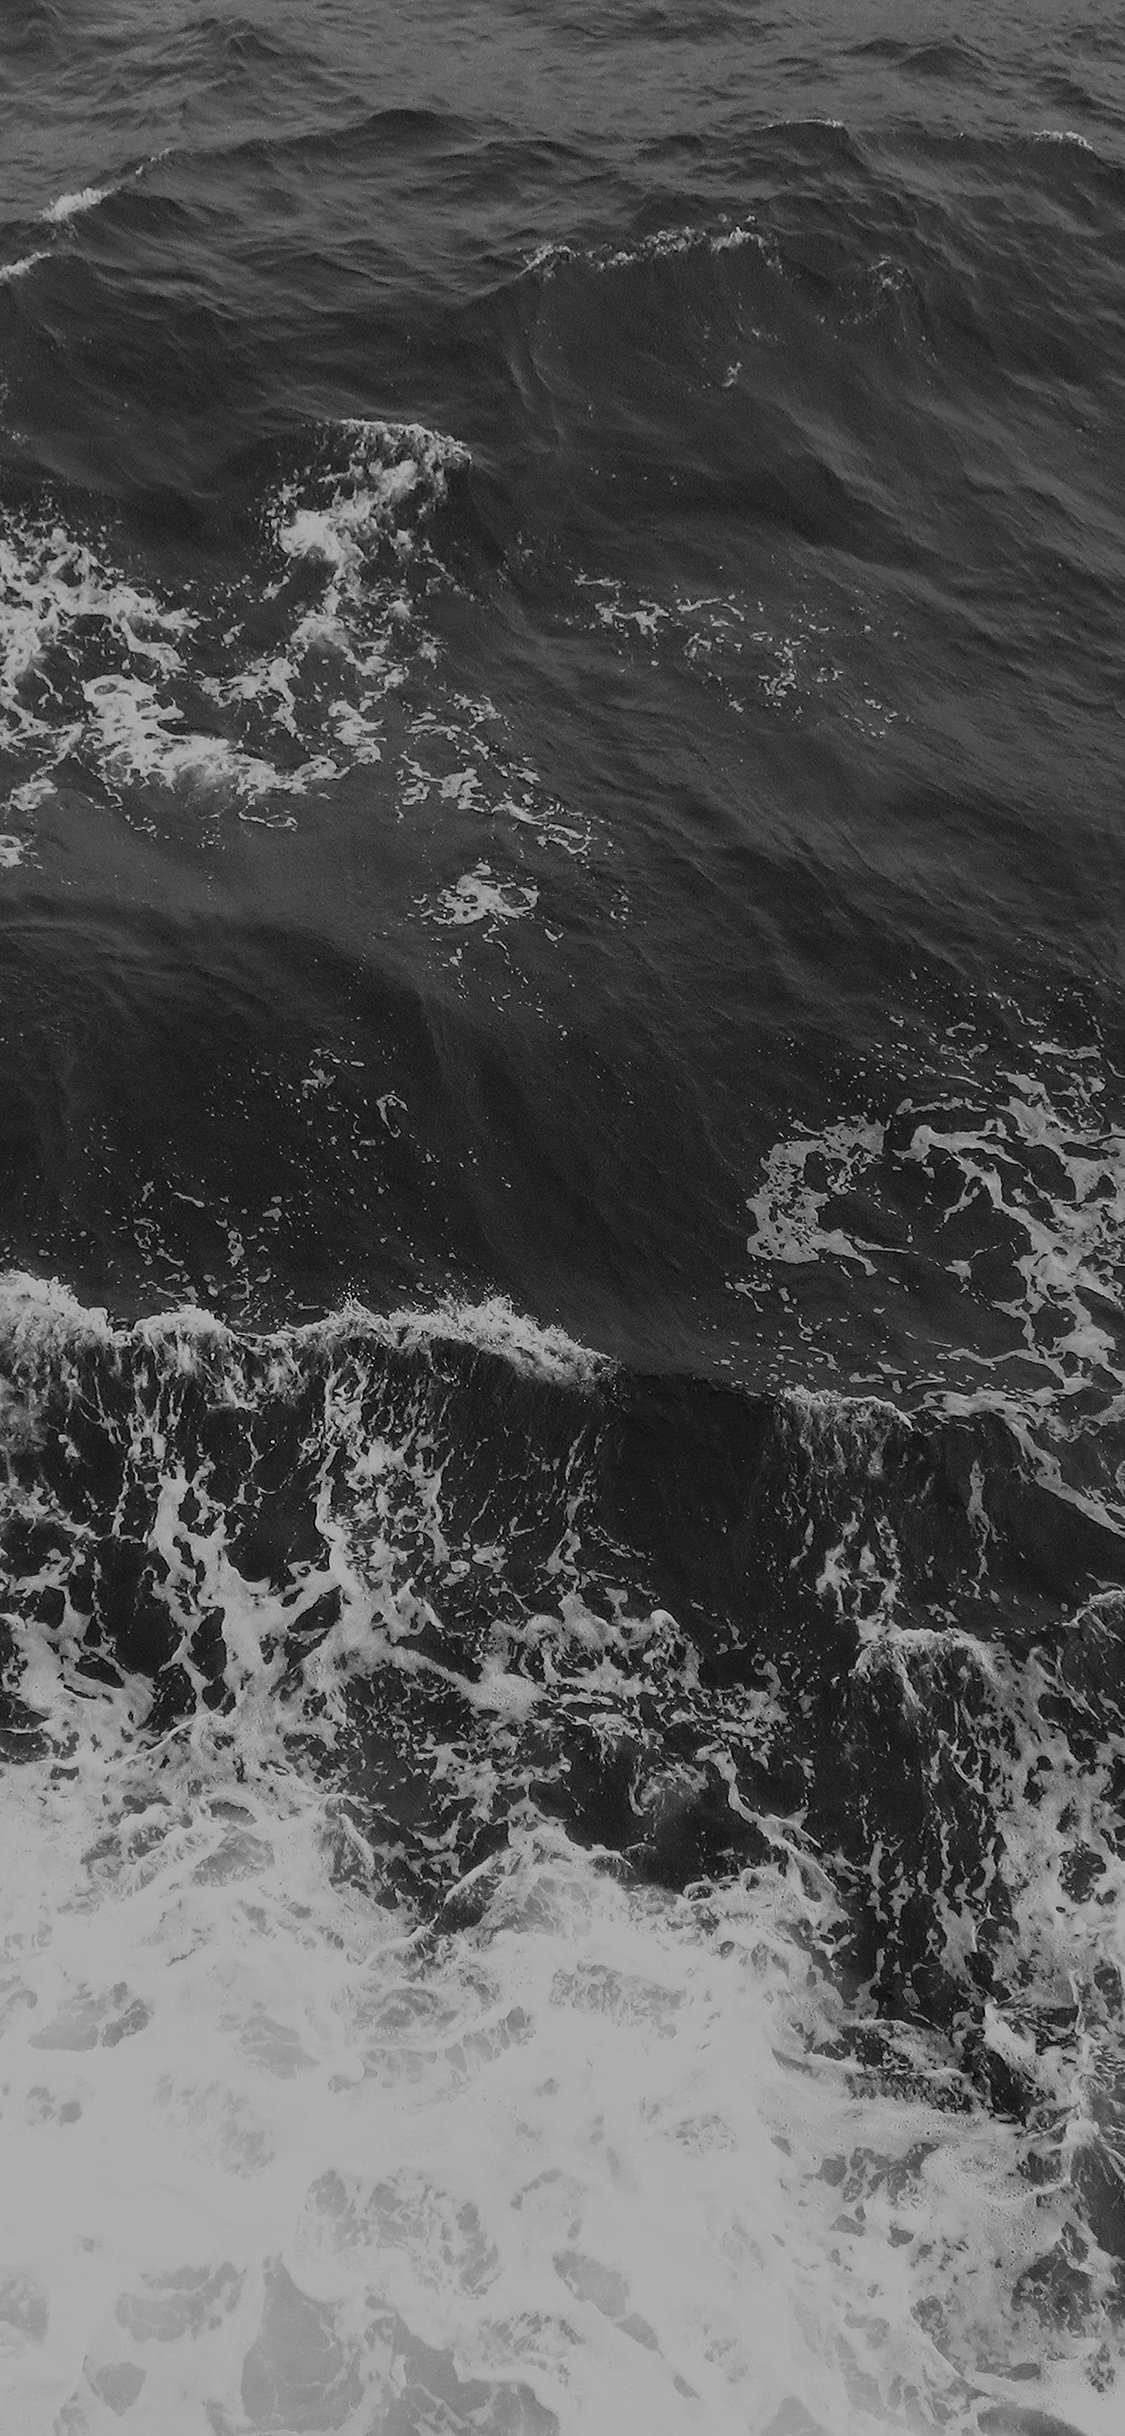 iPhone X wallpaper. water sea vacation texture ocean beach dark bw